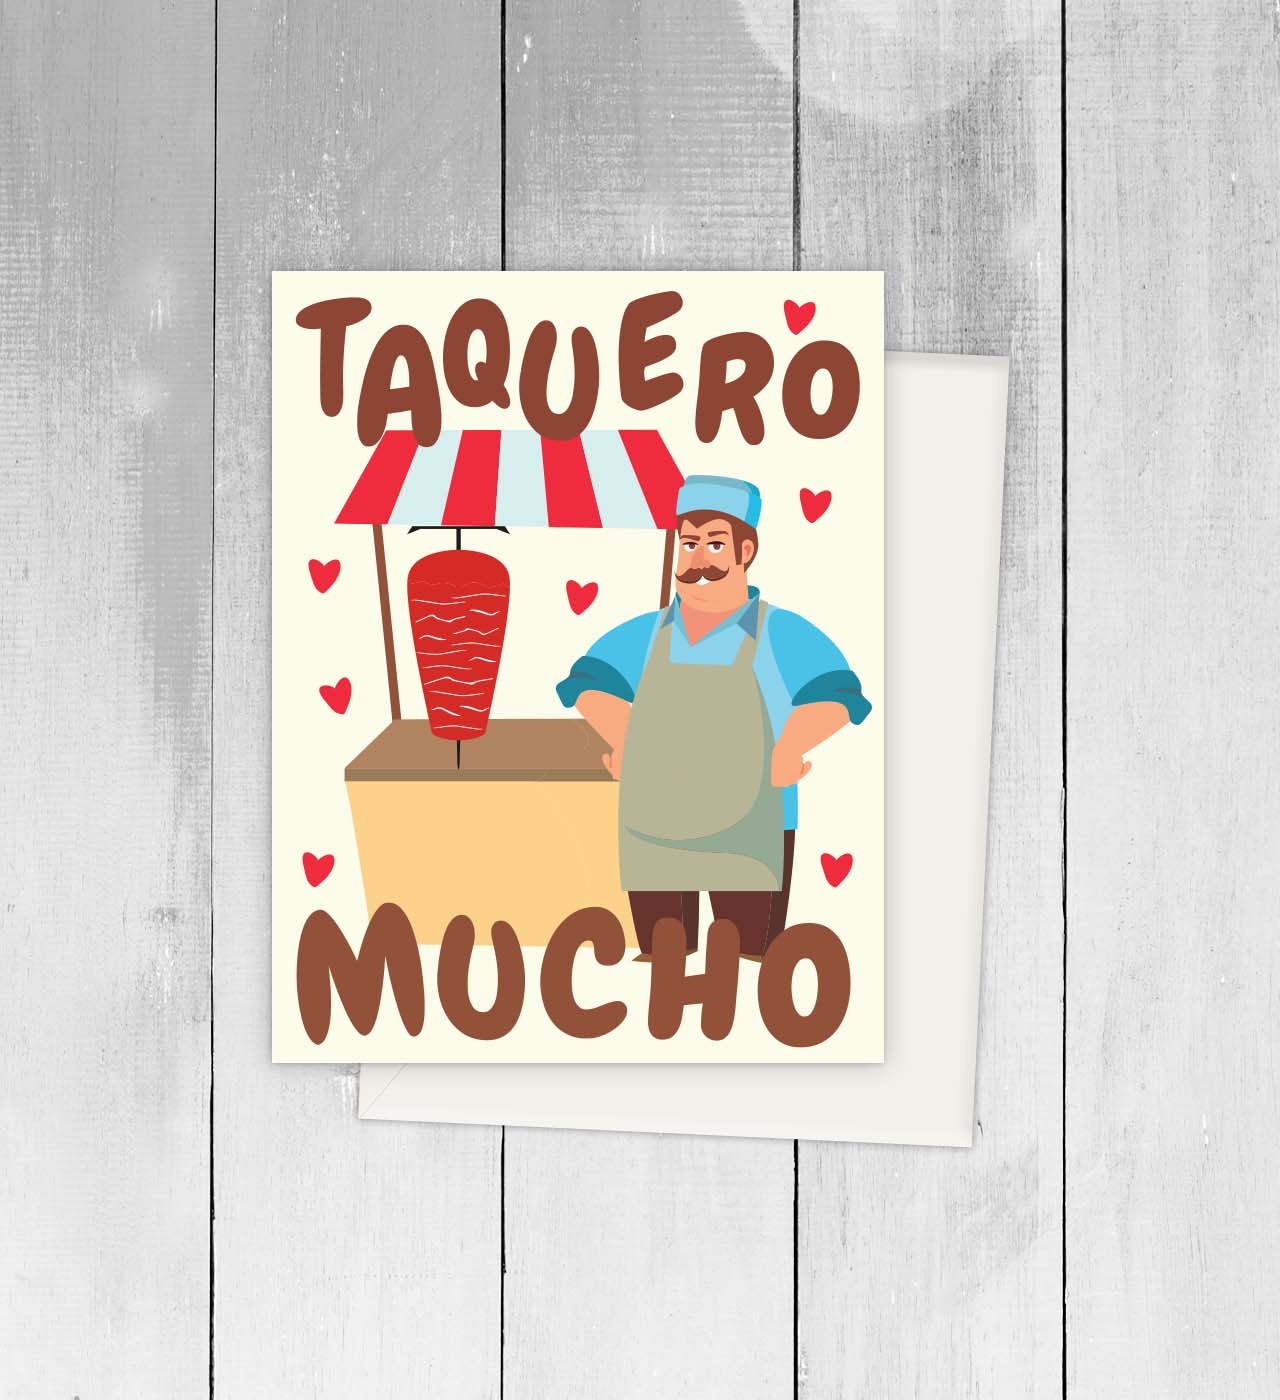 Taquero Mucho Spanish Greeting Card